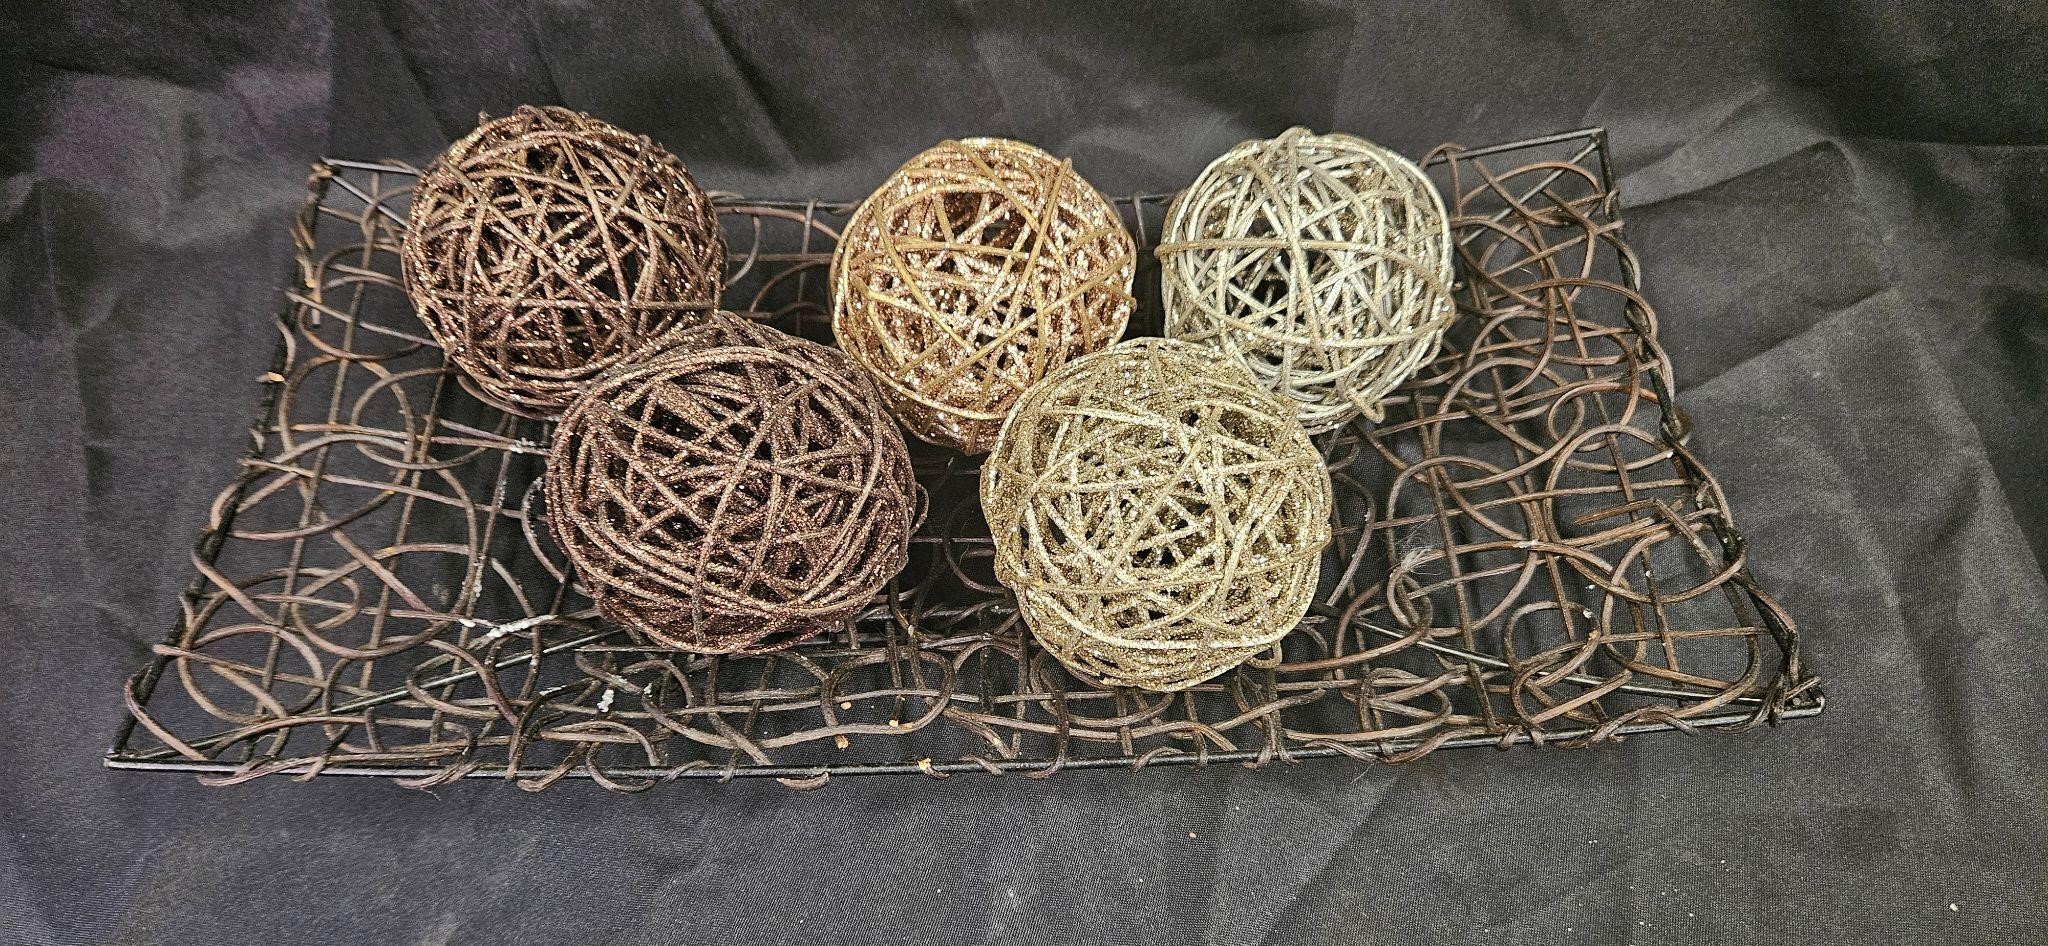 centerpiece bowl with 5 decorative balls